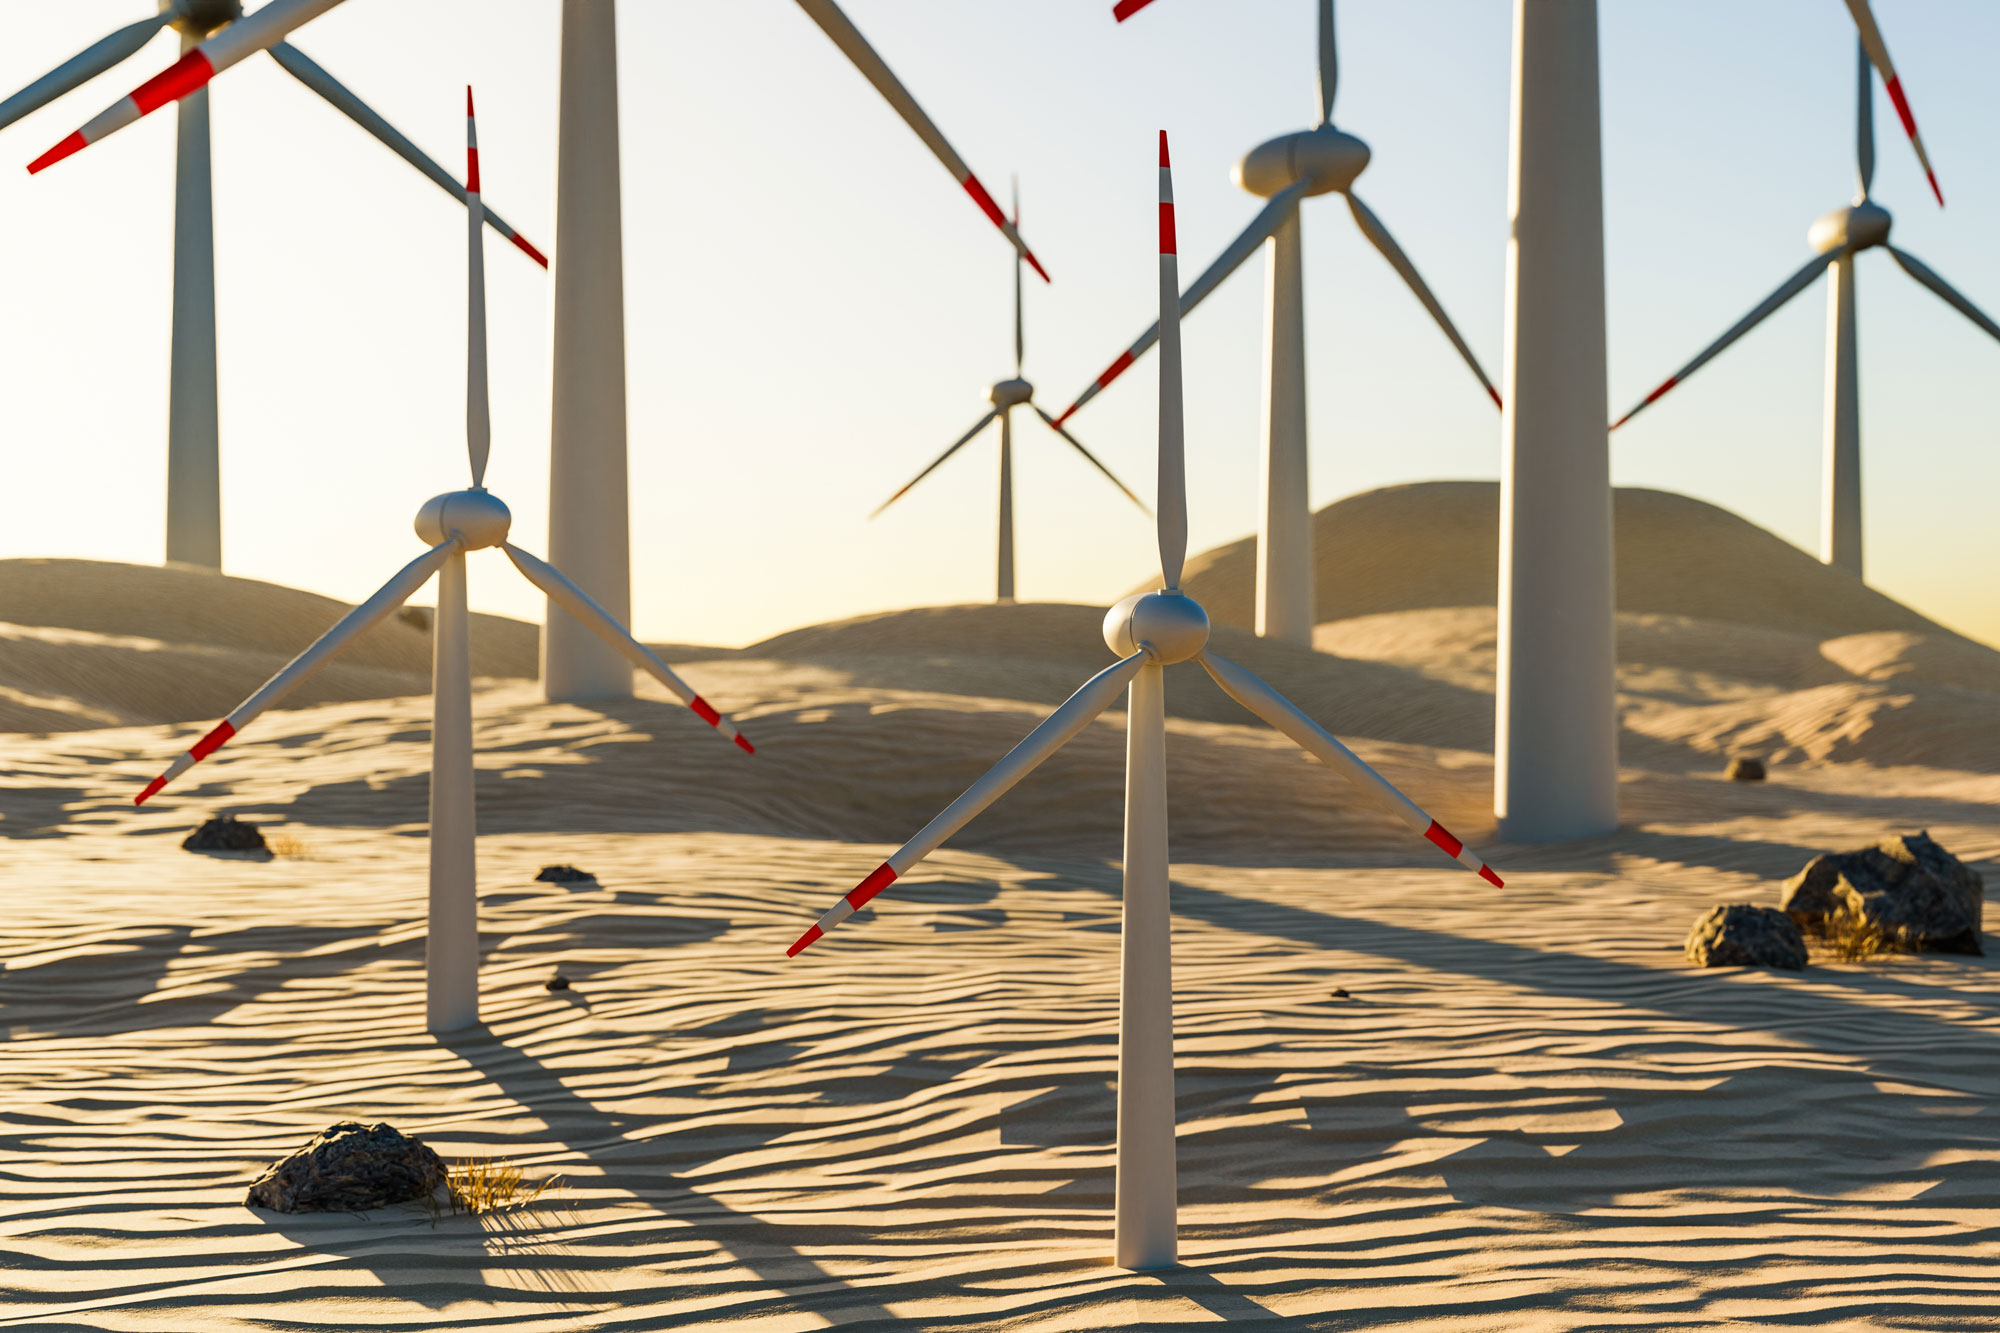 Wind Farm with Wind Turbines in a desert